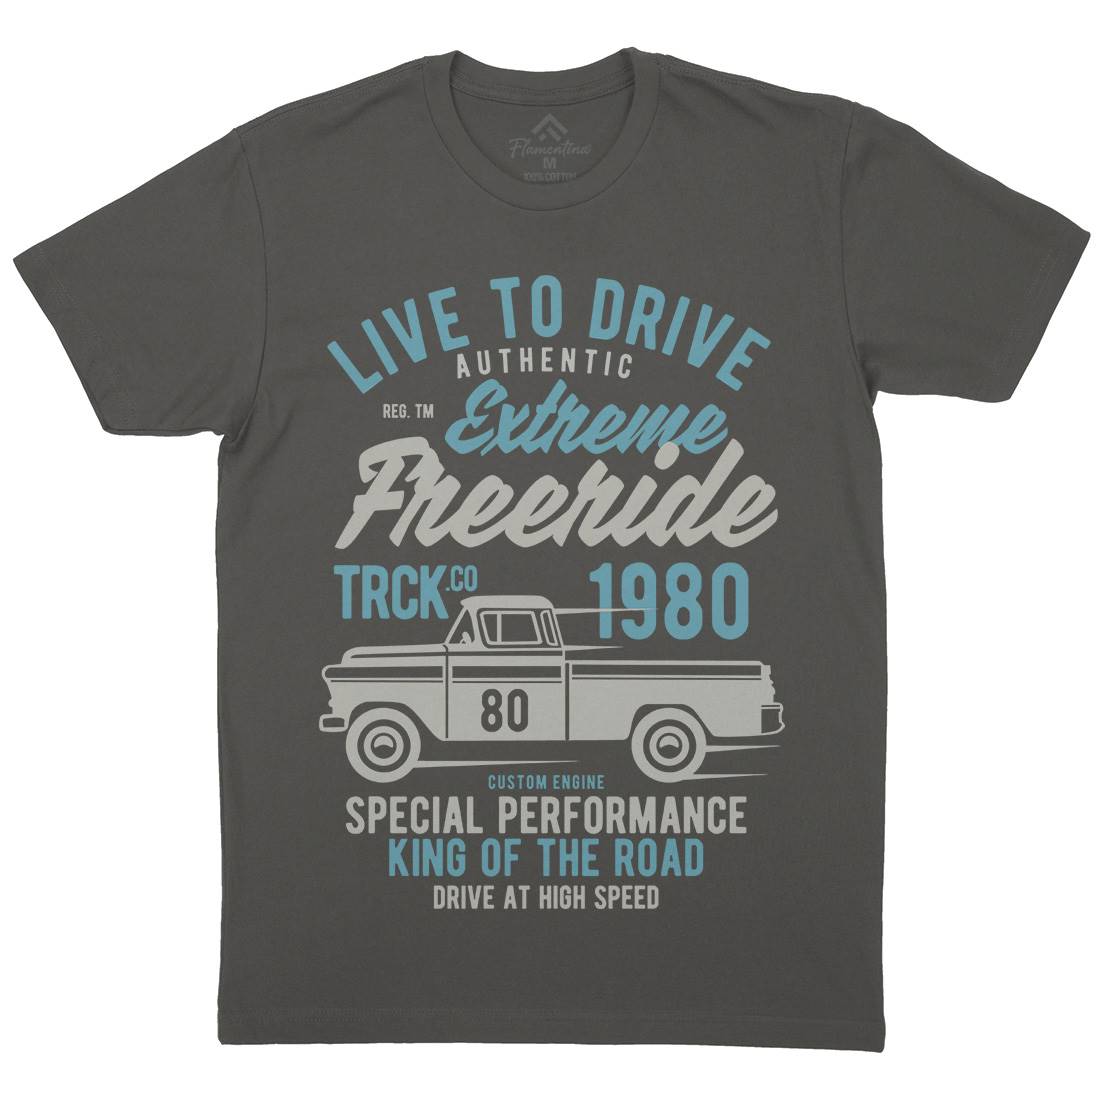 Extreme Freeride Truck Mens Crew Neck T-Shirt Cars B401